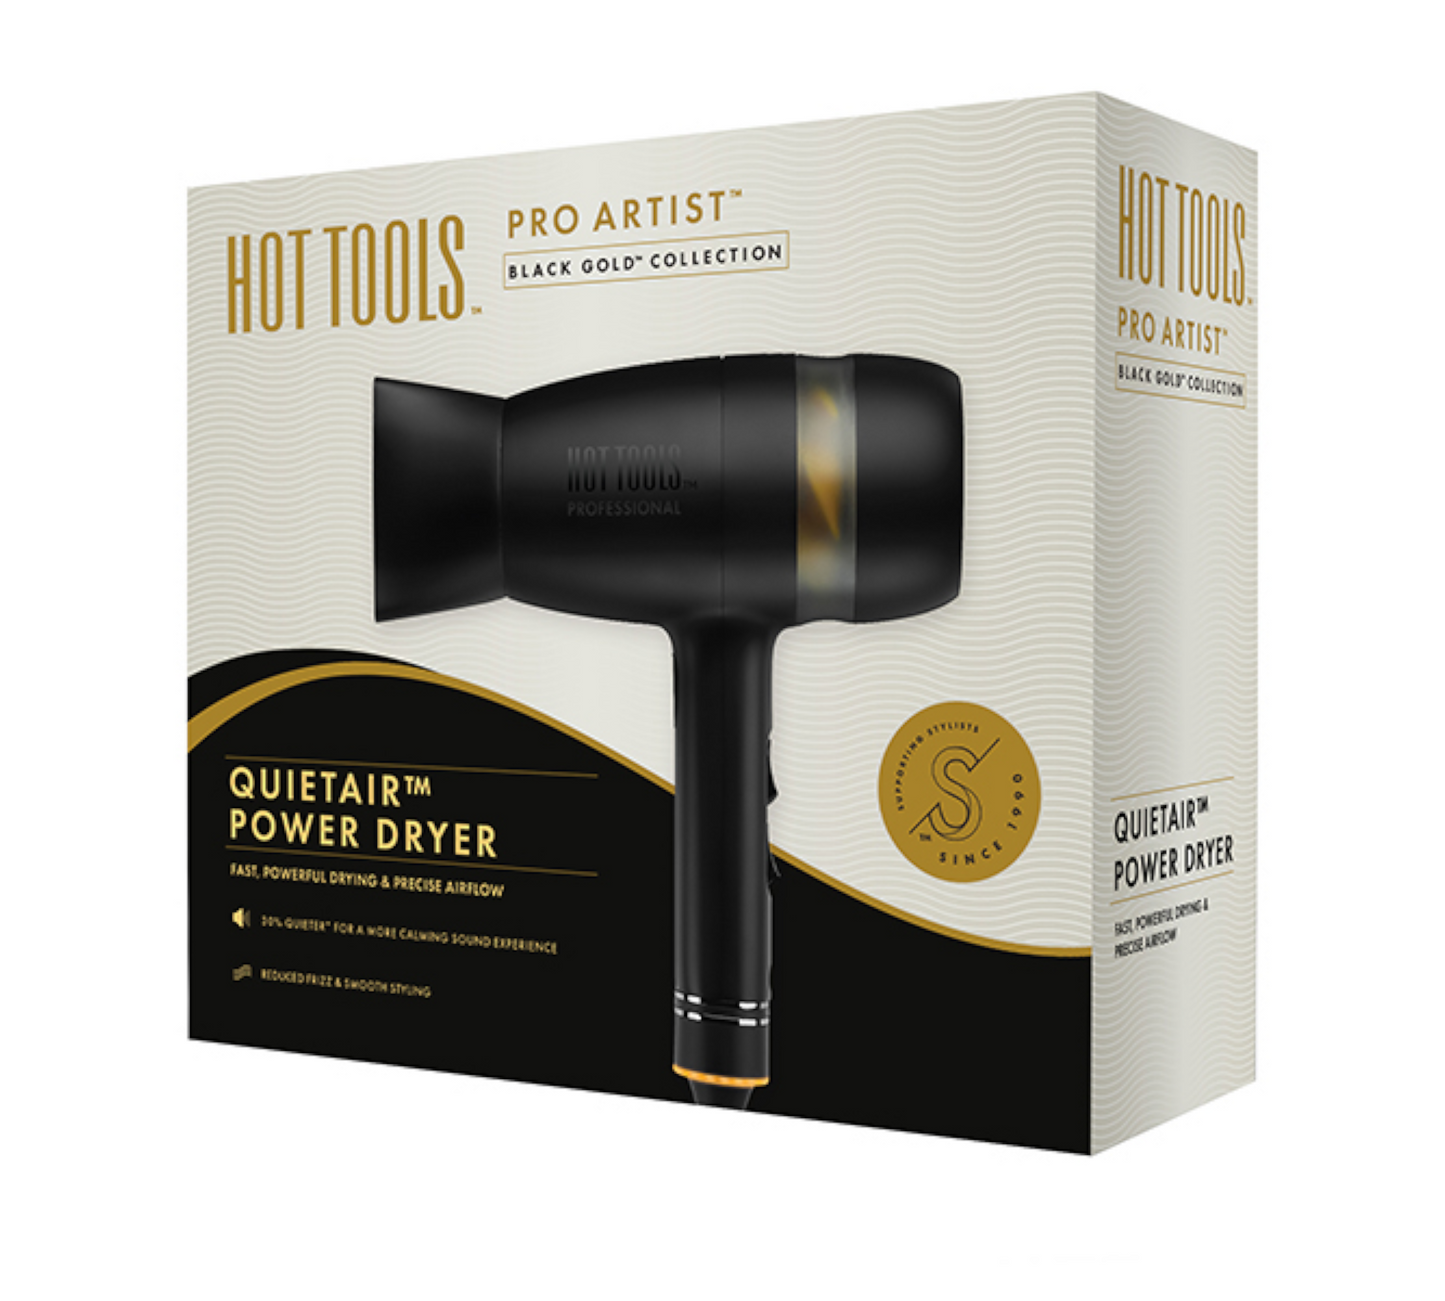 Hot Tools Pro Artist Black Gold Quietair Power Dryer